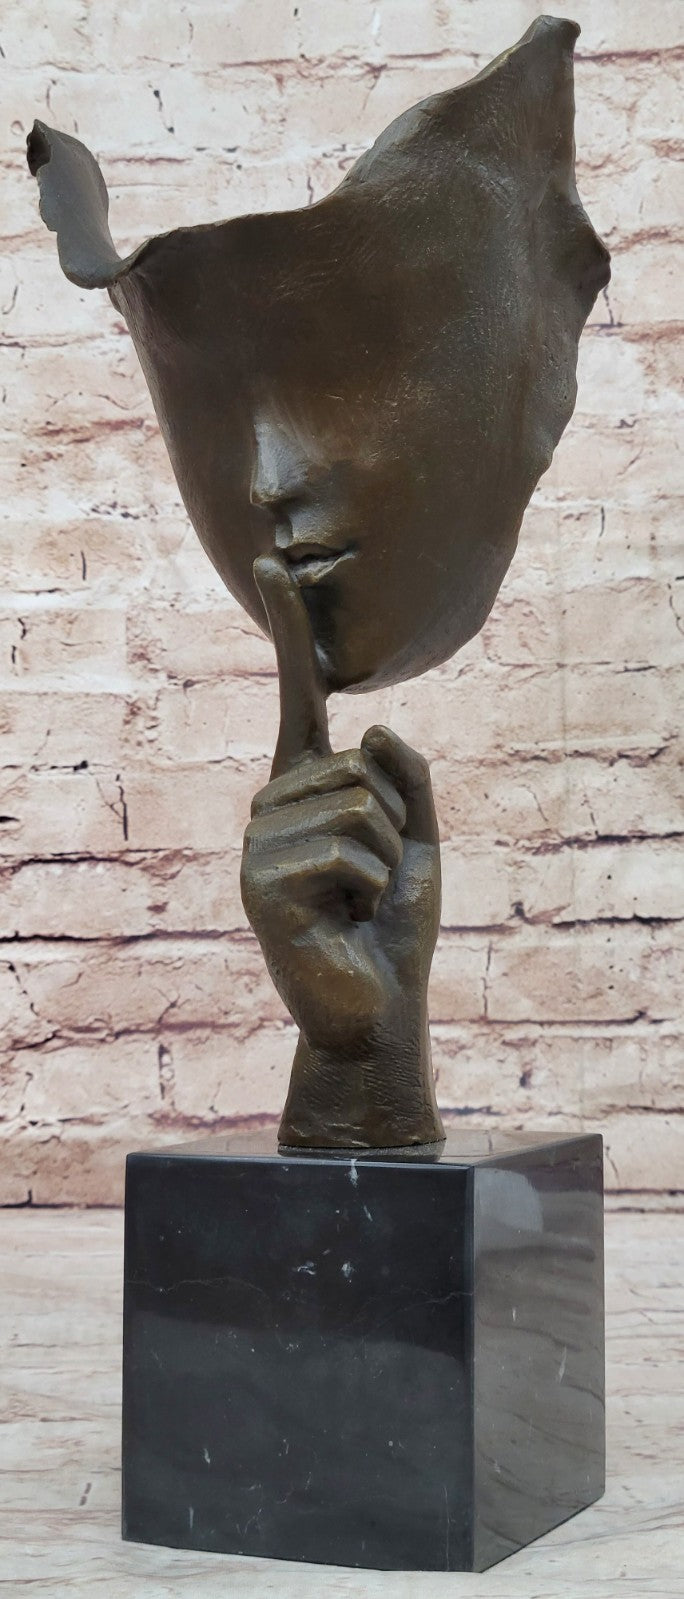 Hot Cast Dali Face Bronze Sculpture Marble Figurine Home Office Decoration Sale